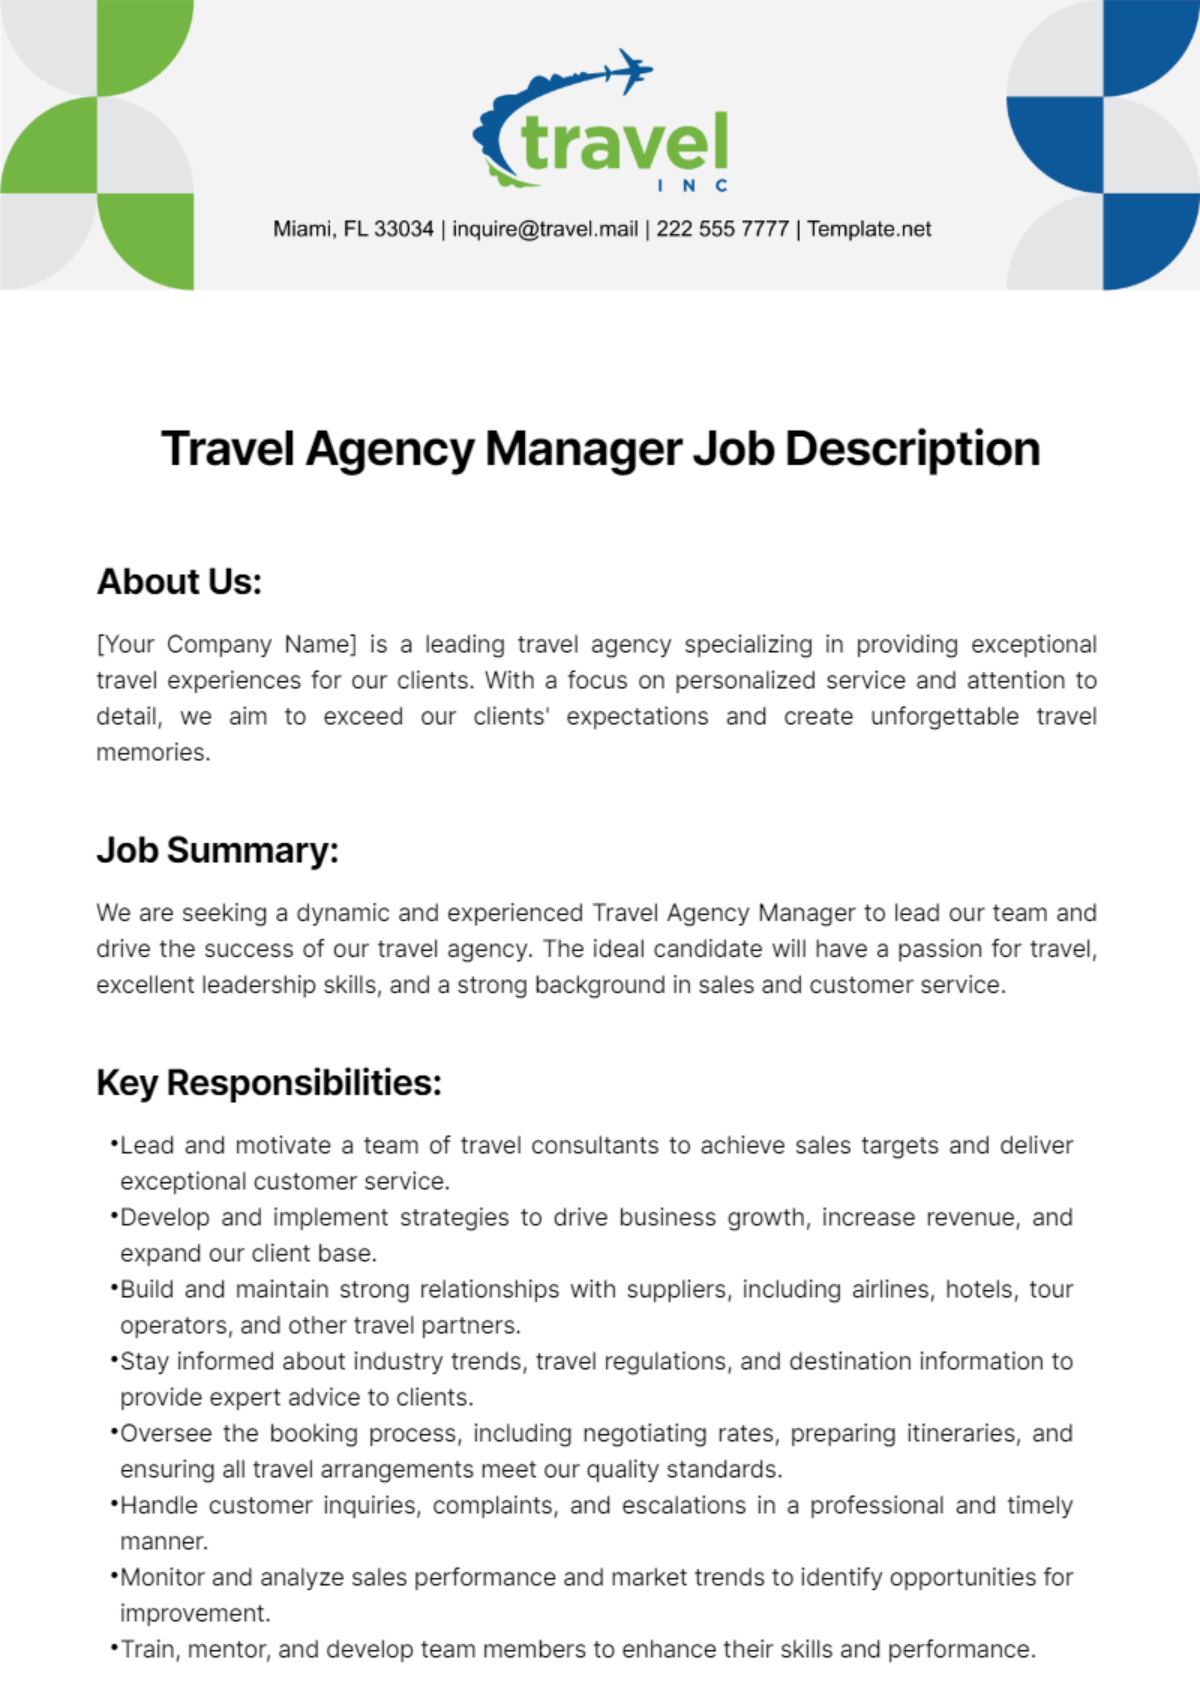 Travel Agency Manager Job Description Template